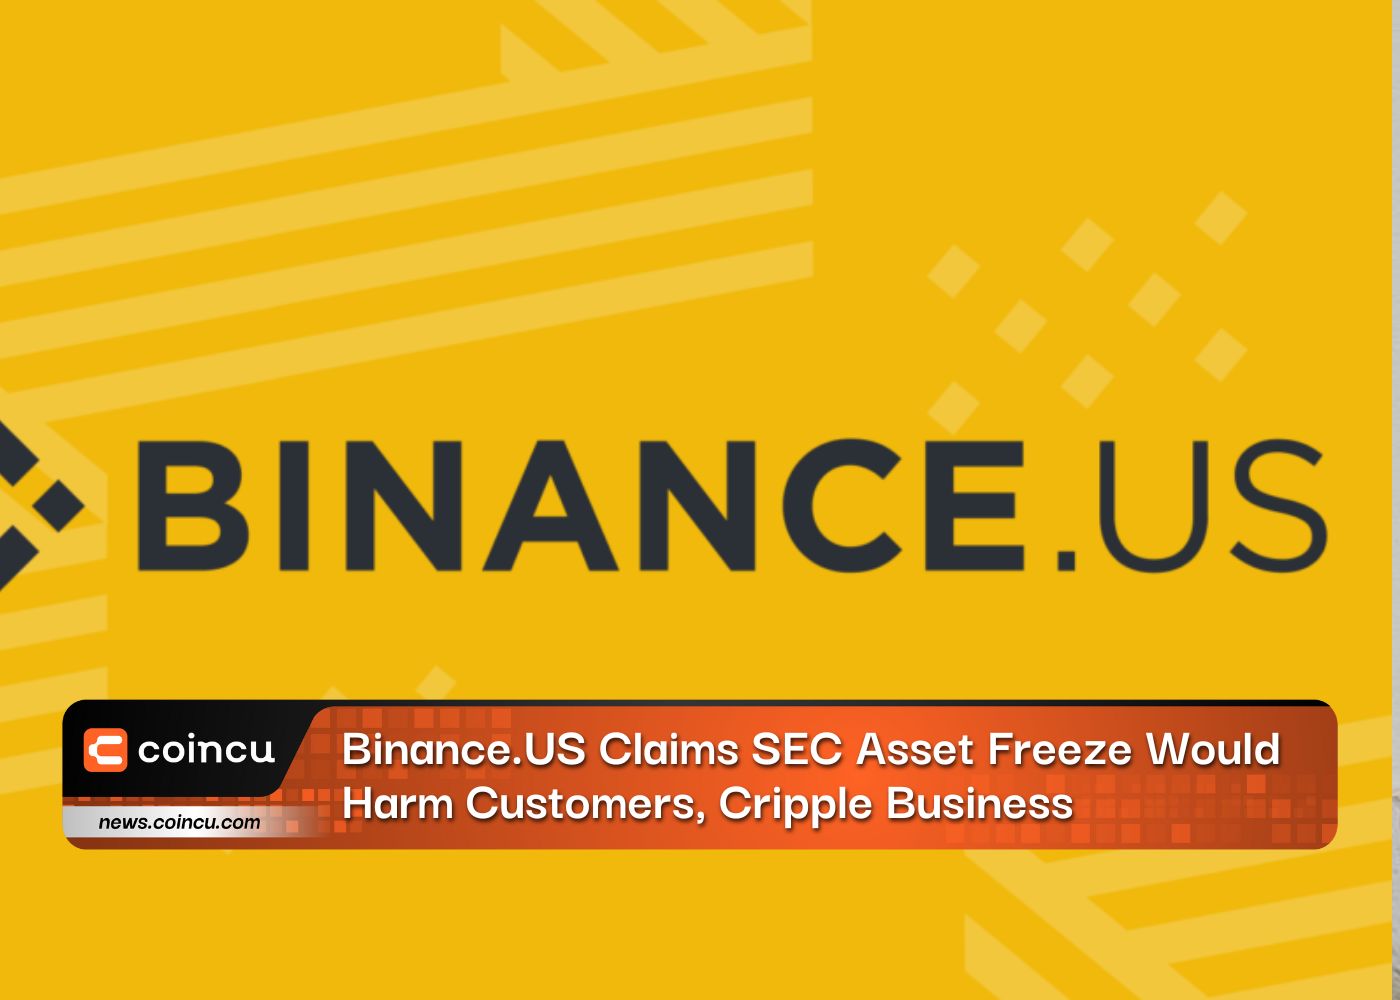 Binance.US Claims SEC Asset Freeze Would Harm Customers, Cripple Business